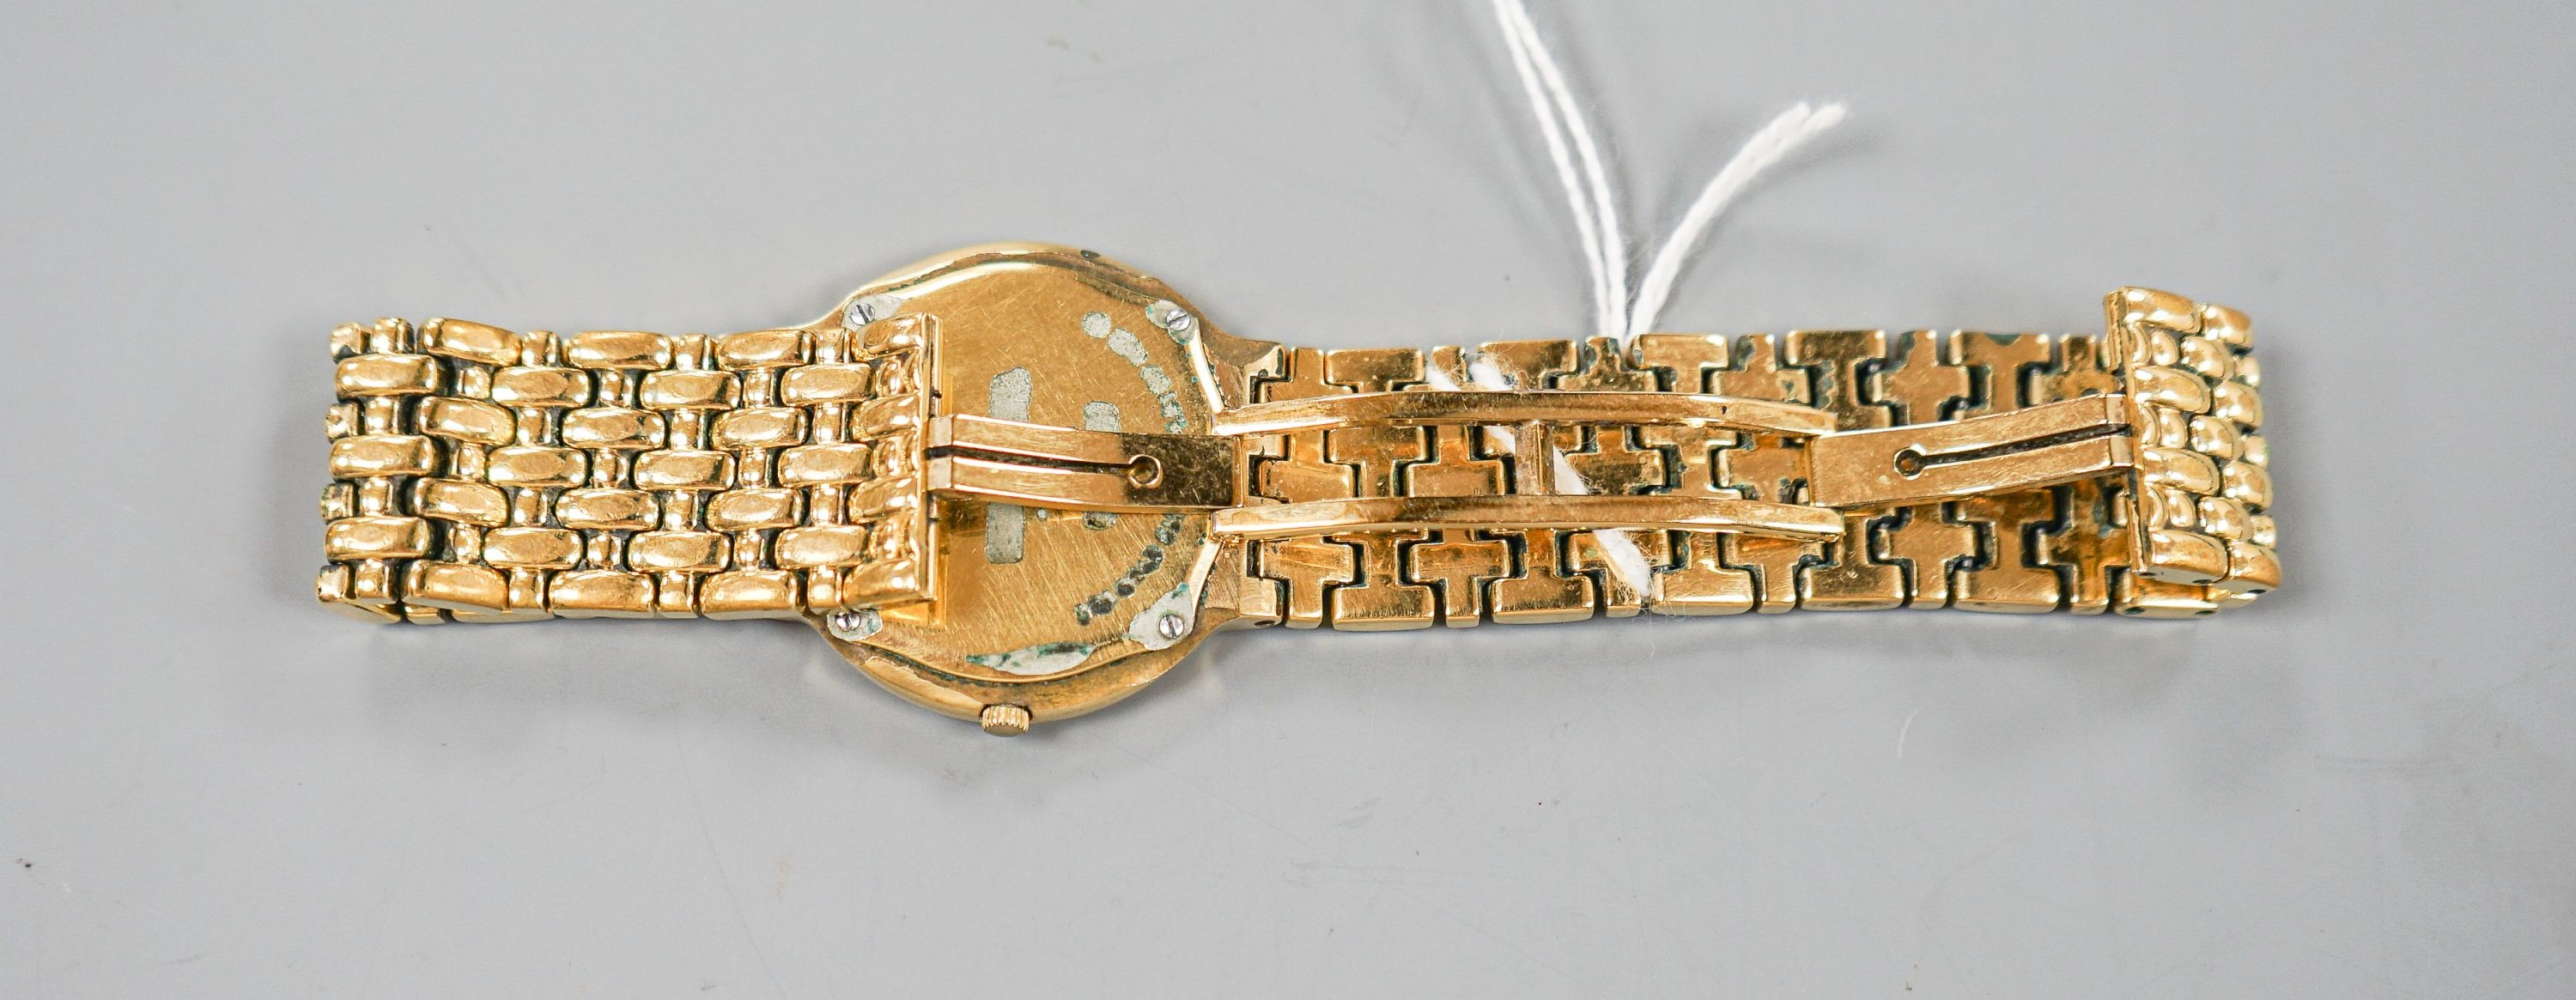 A gentleman's steel and gold plated Raymond Weil Fidelio quartz wrist watch (a.f.).